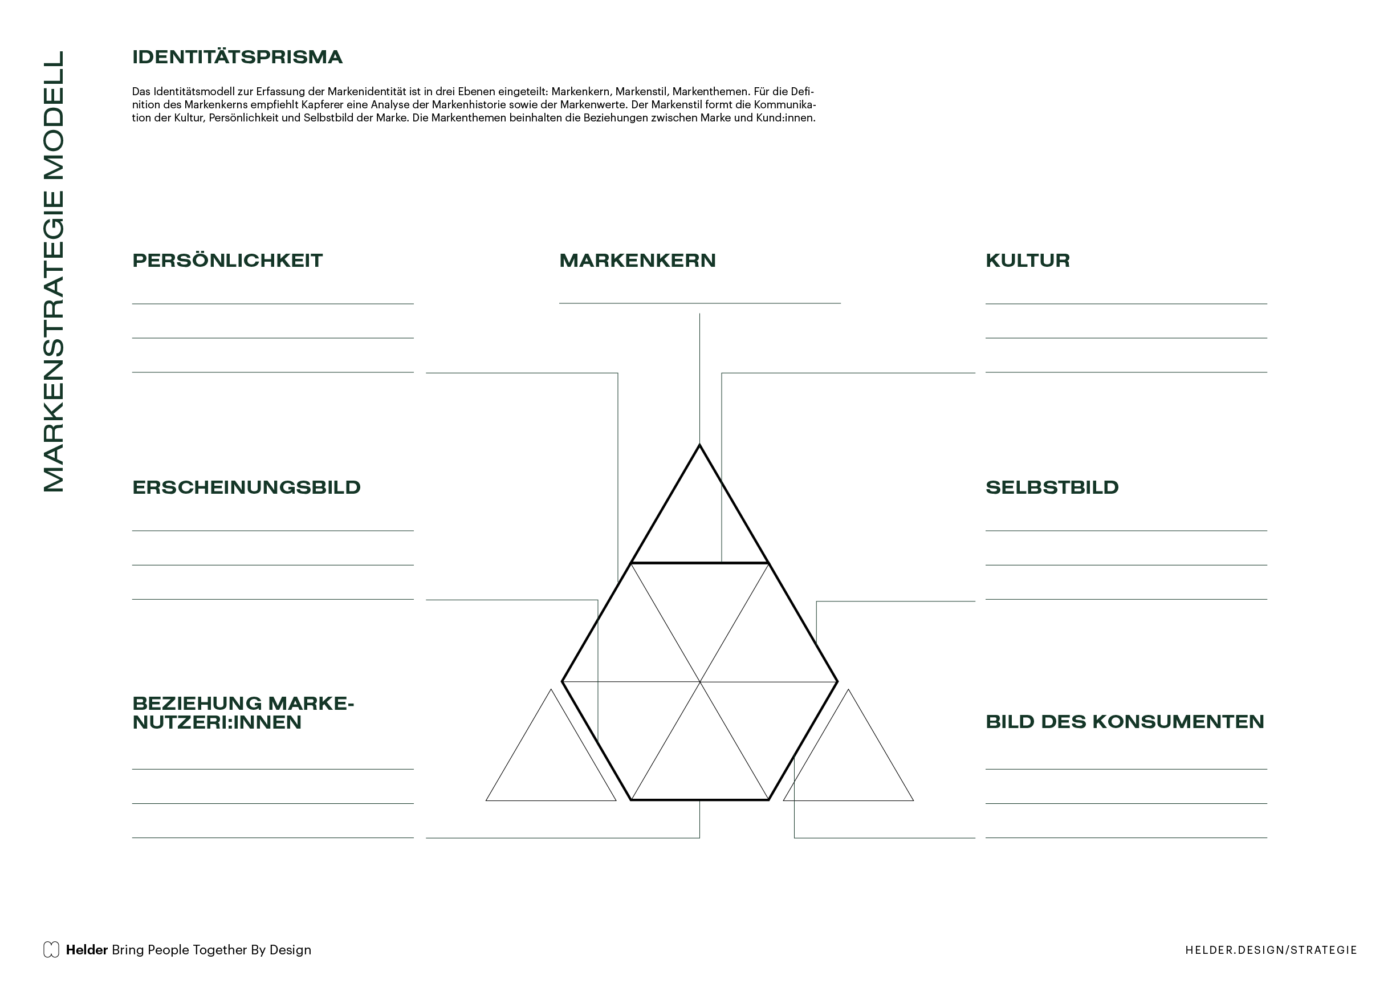 free-brand-strategy-template-identity-prisma-pdf-helder